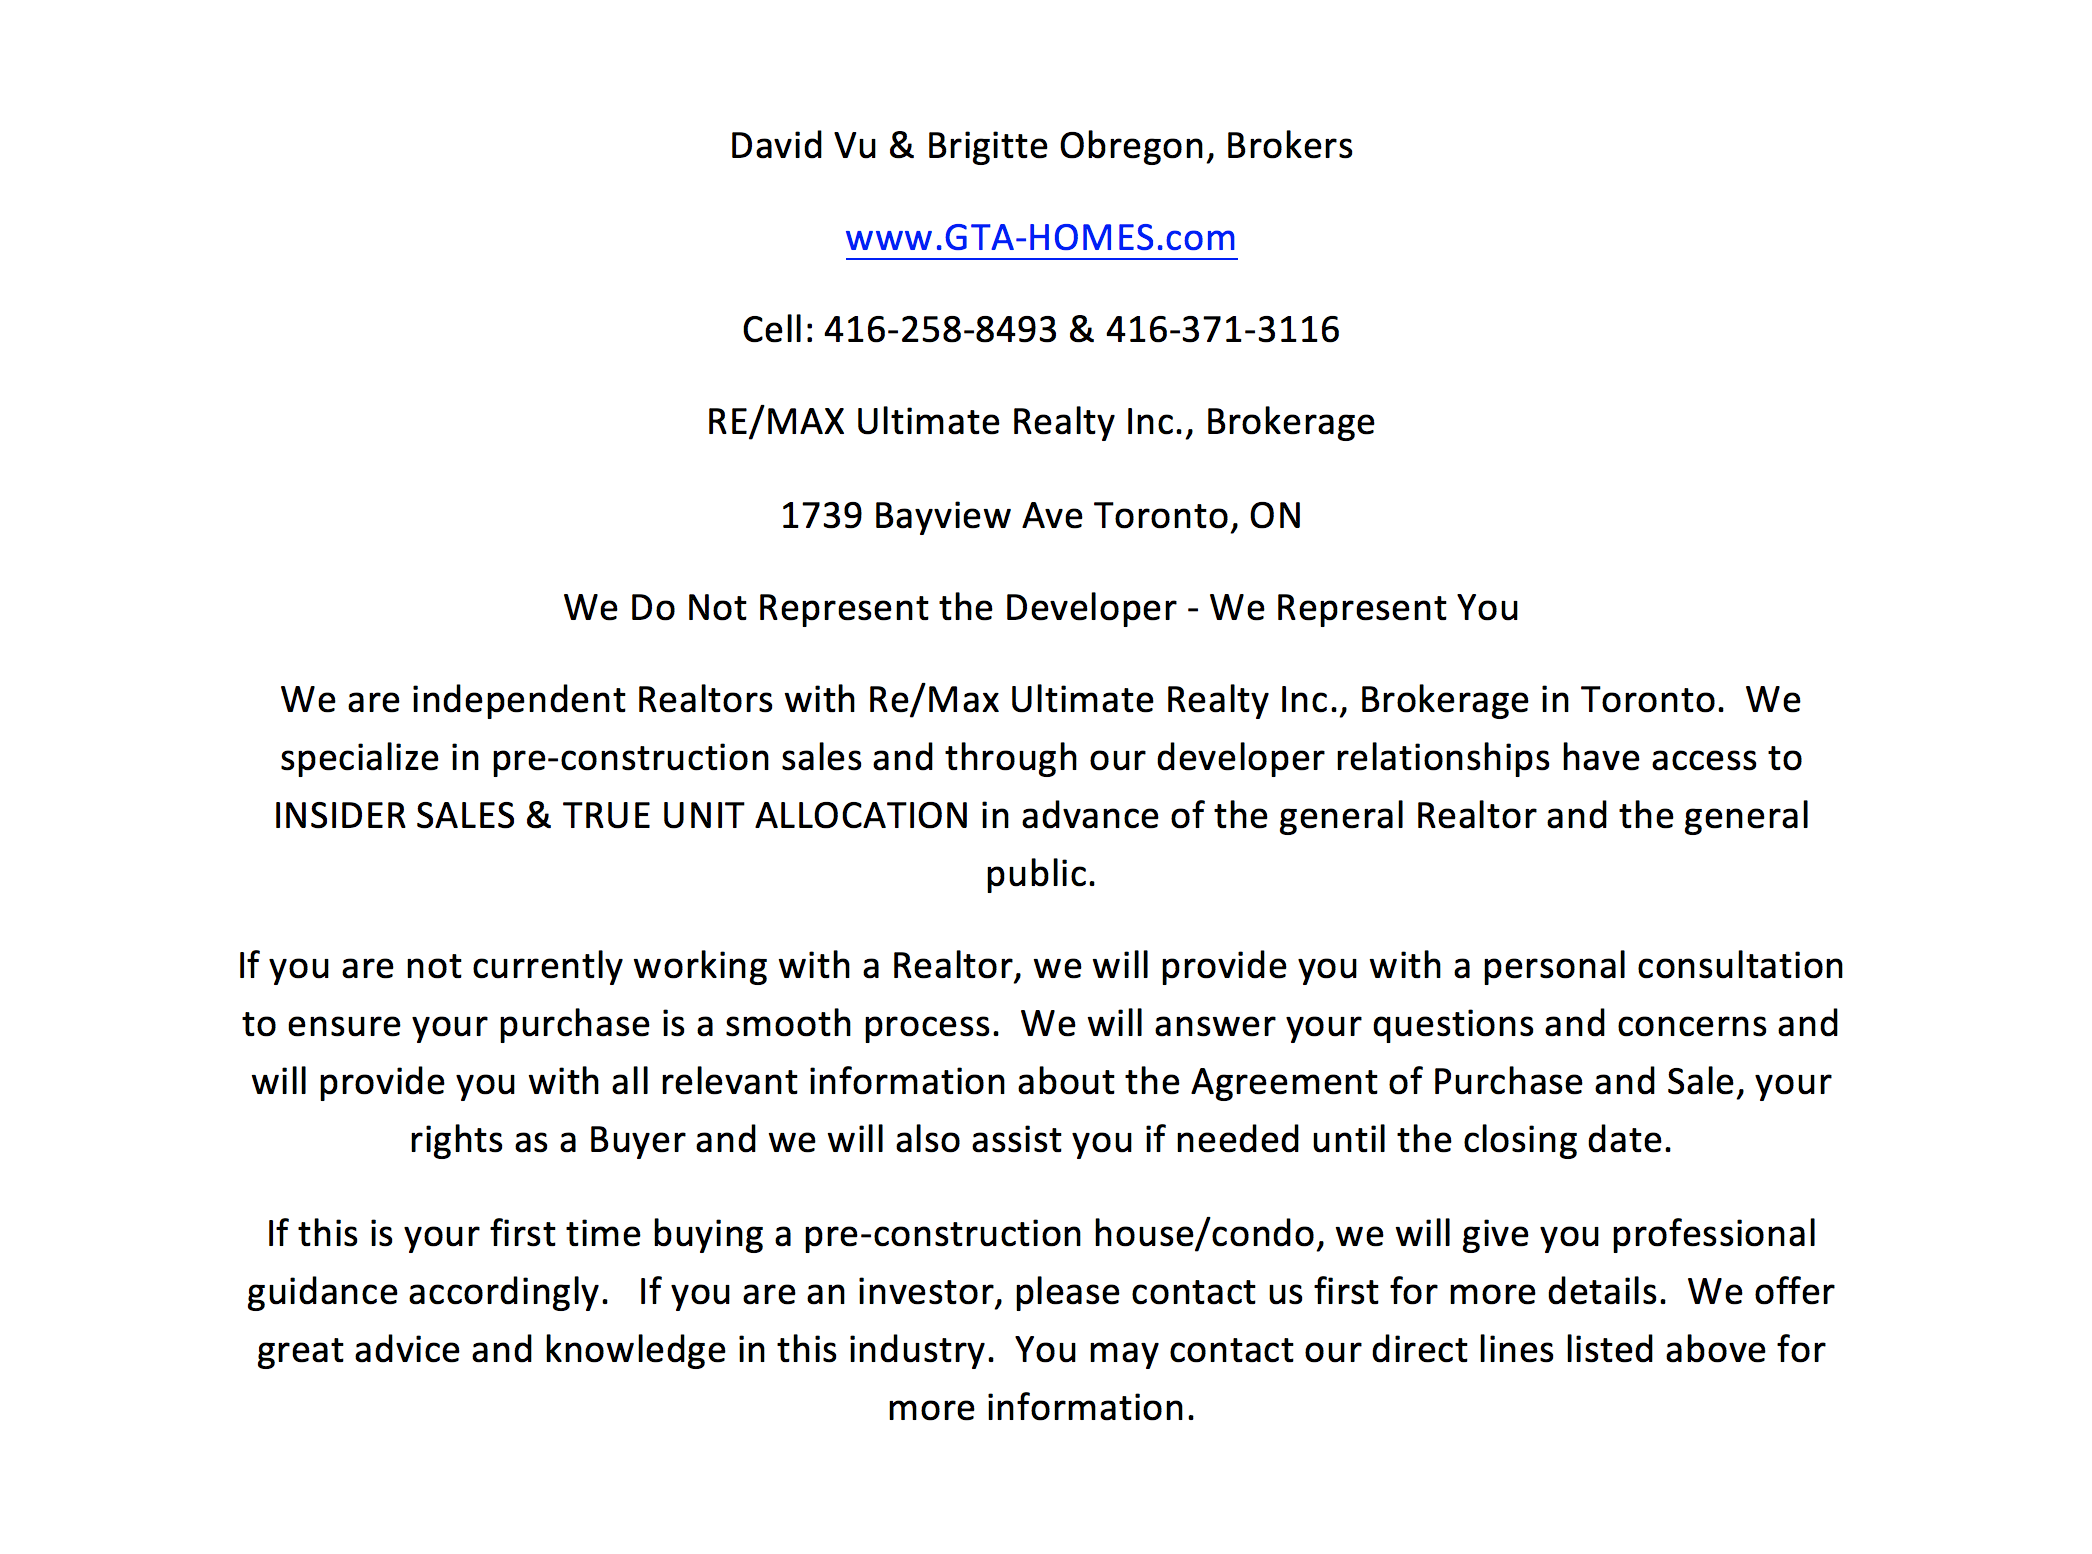 Condo Sales Agents Contact Info